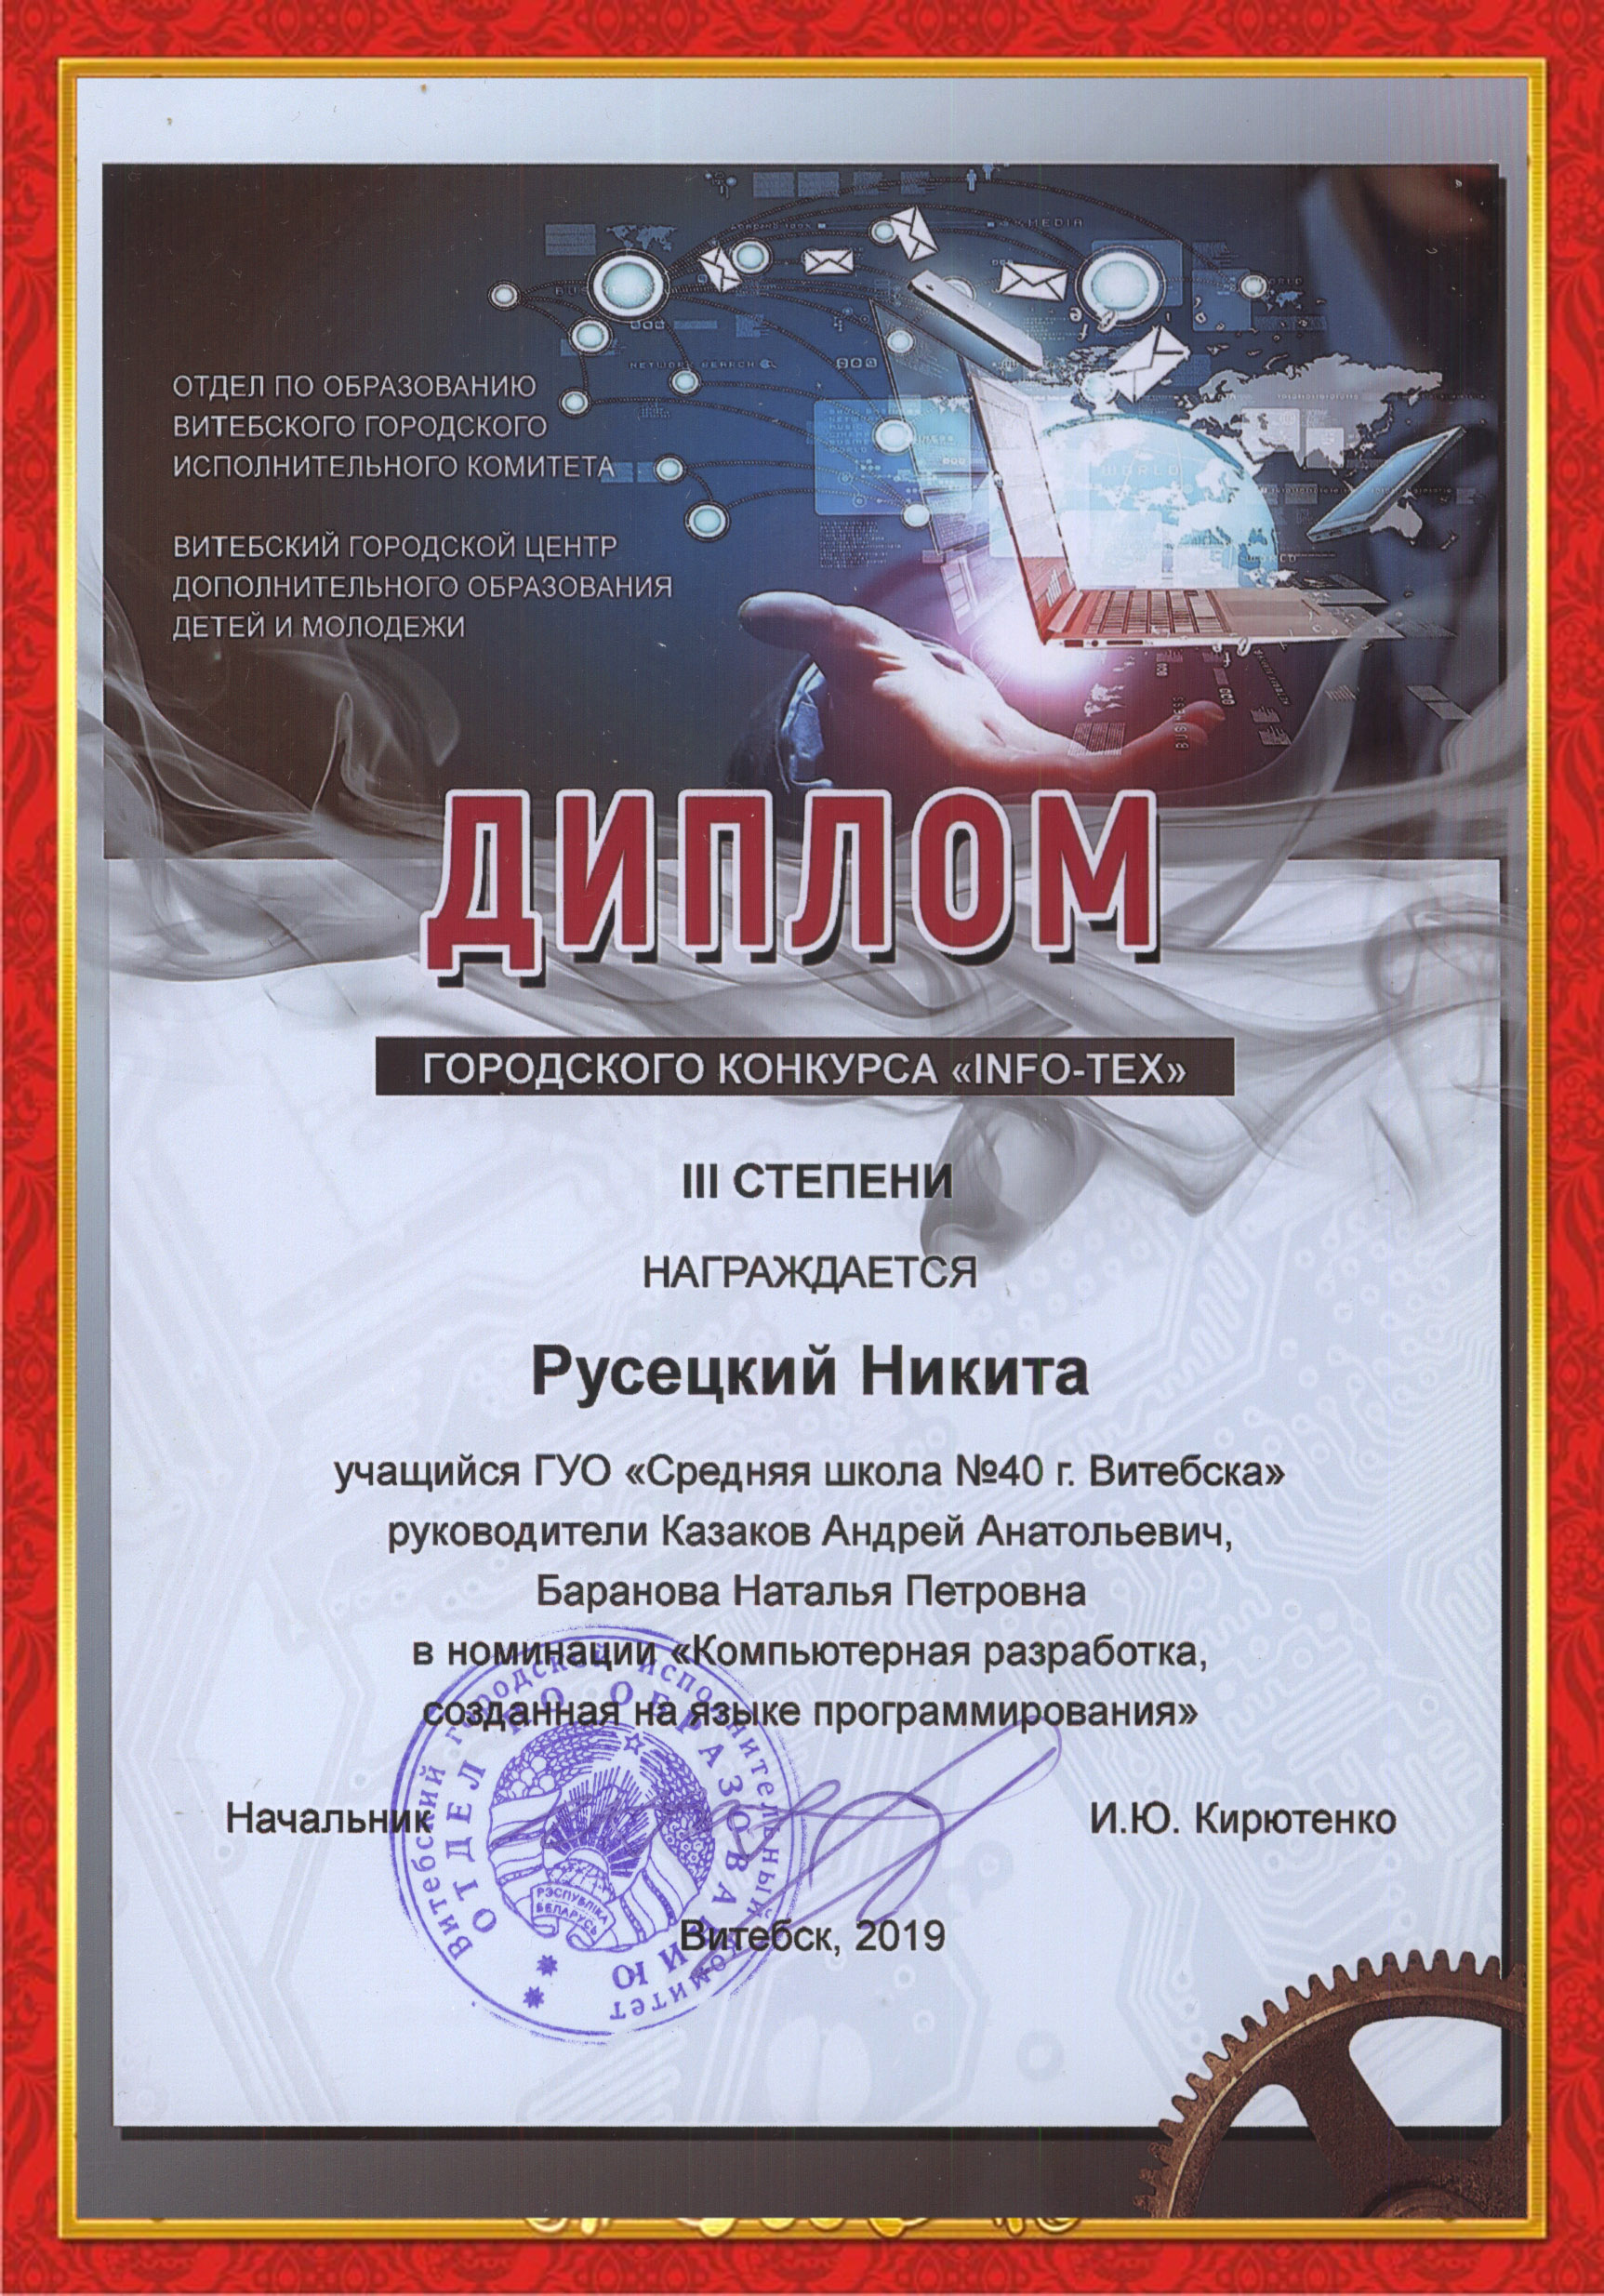 Diplom Rusetsky InfoTex 2019